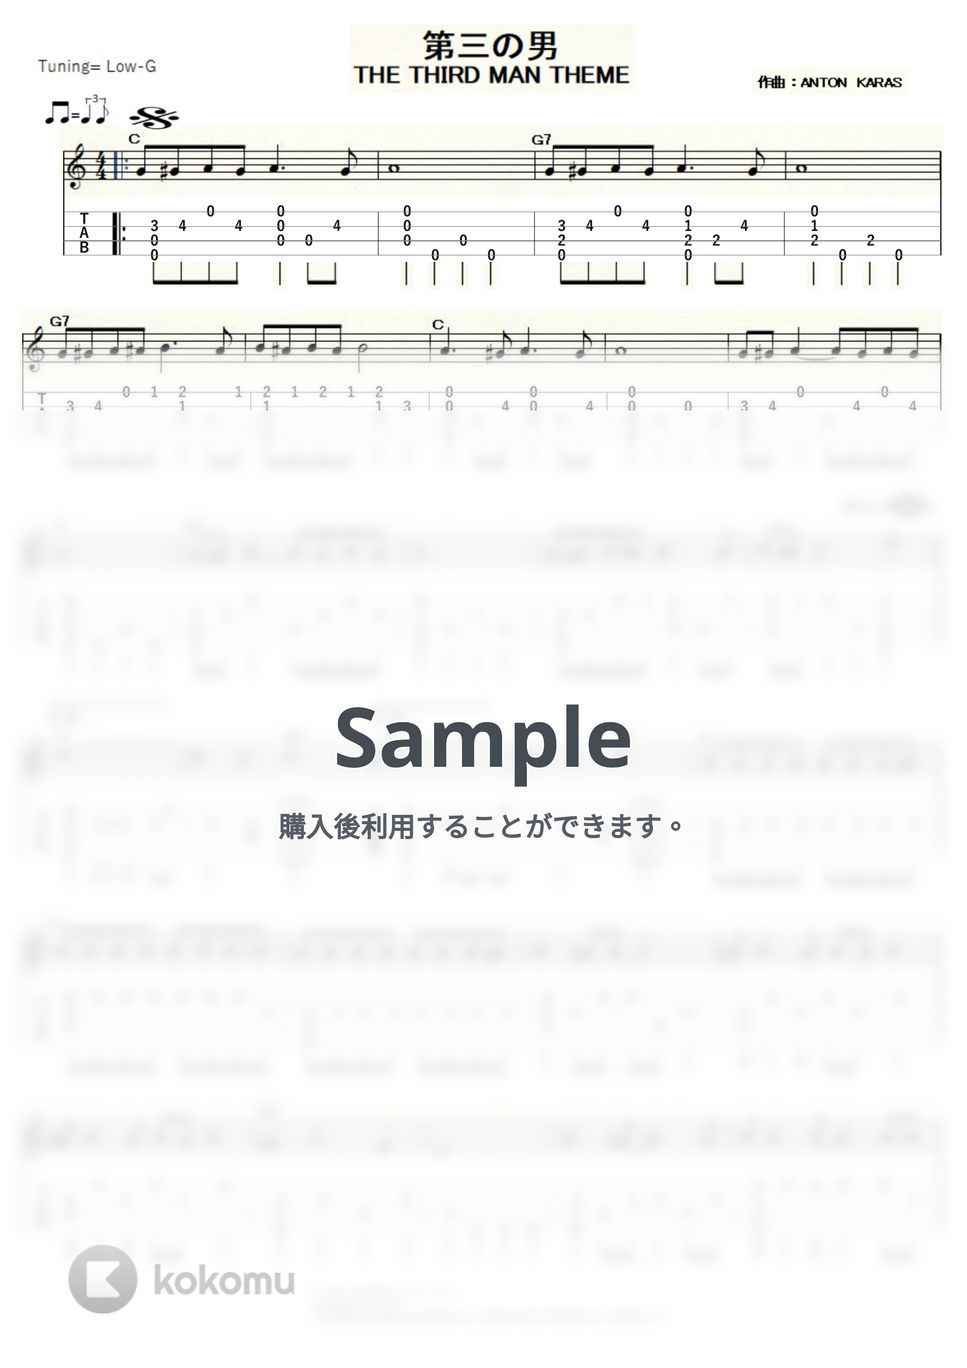 THE THIRD MAN - 第三の男 (ｳｸﾚﾚｿﾛ / Low-G / 中級) by ukulelepapa